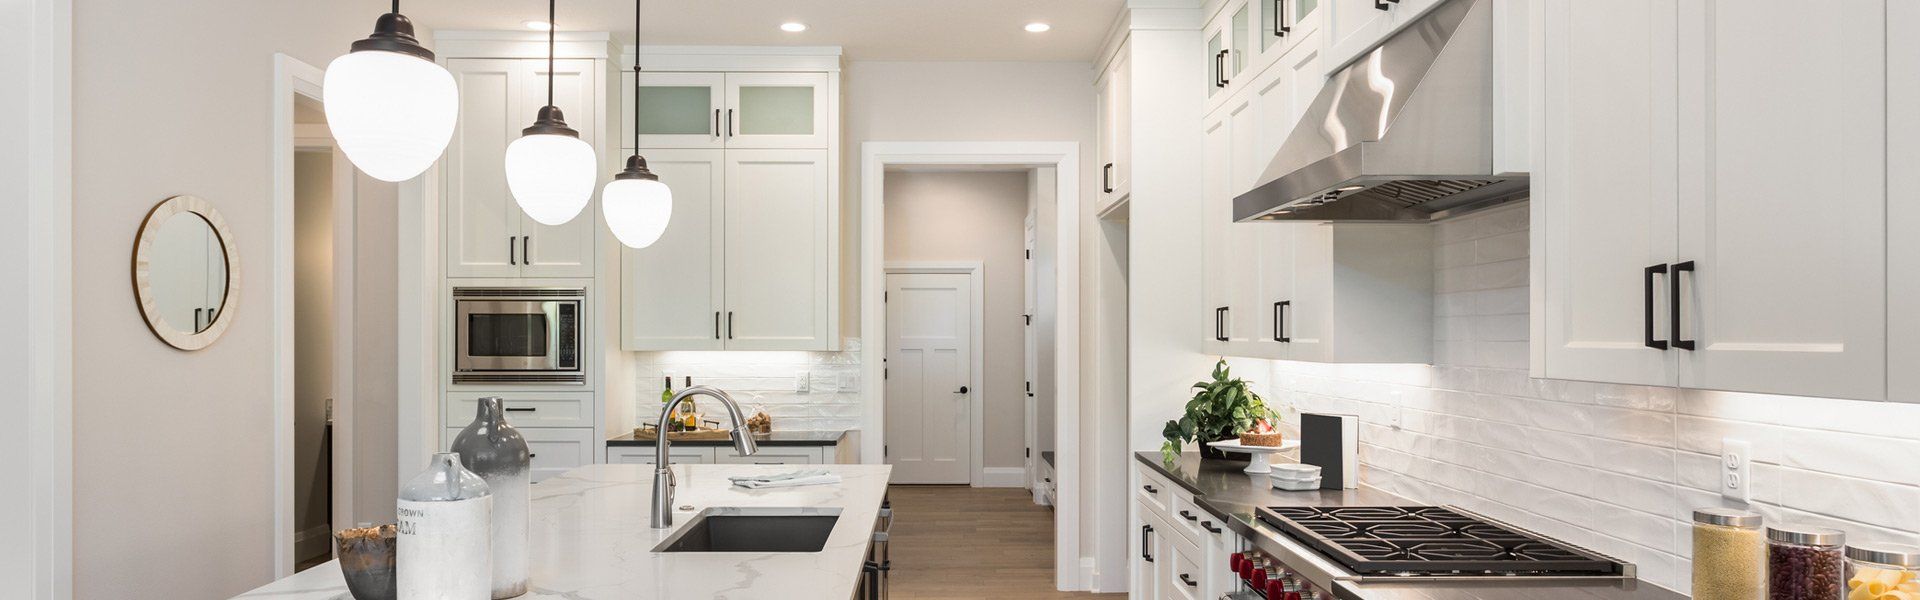 DIY Kitchen Cabinets — Beautiful Kitchen in New Luxury Home in Jacksonville Fl